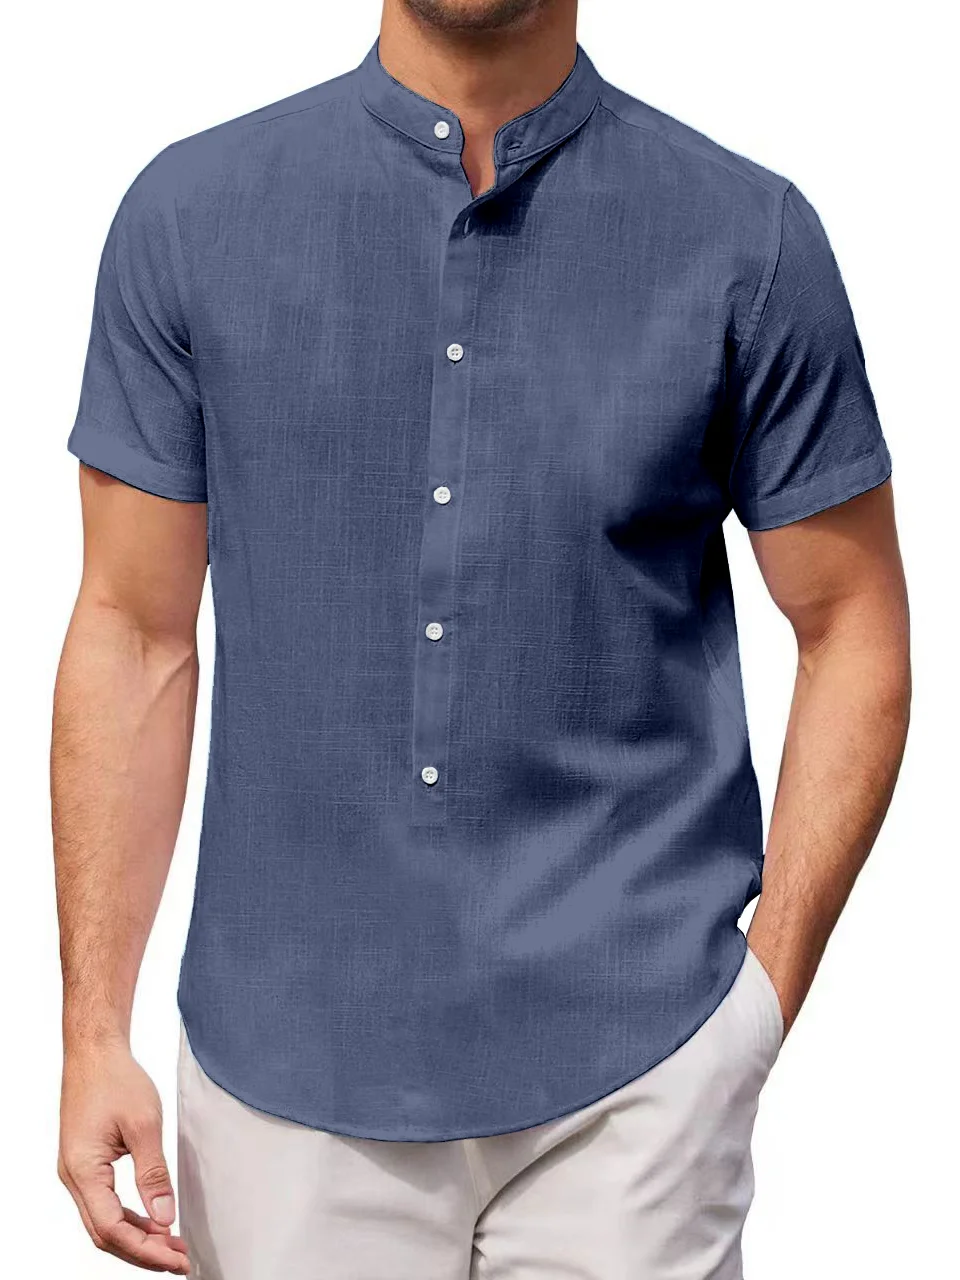 Men's Cotton Linen Casual Vacation Short Sleeve Shirt